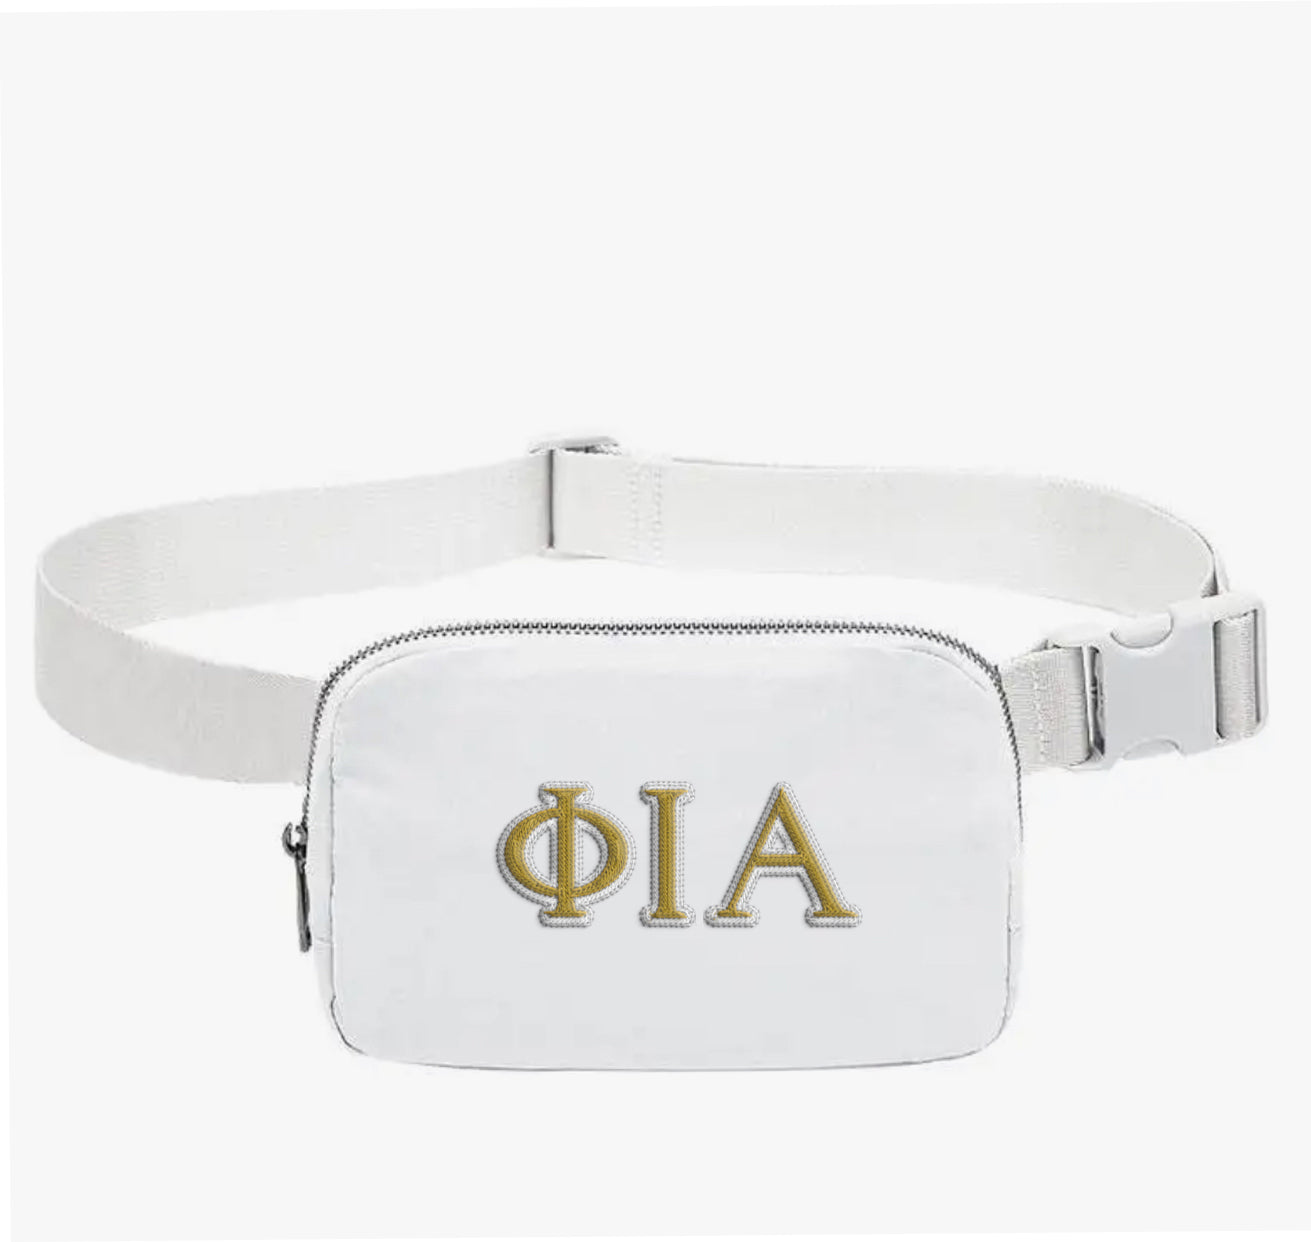 Phi Iota Alpha Embroidered Belt Bag